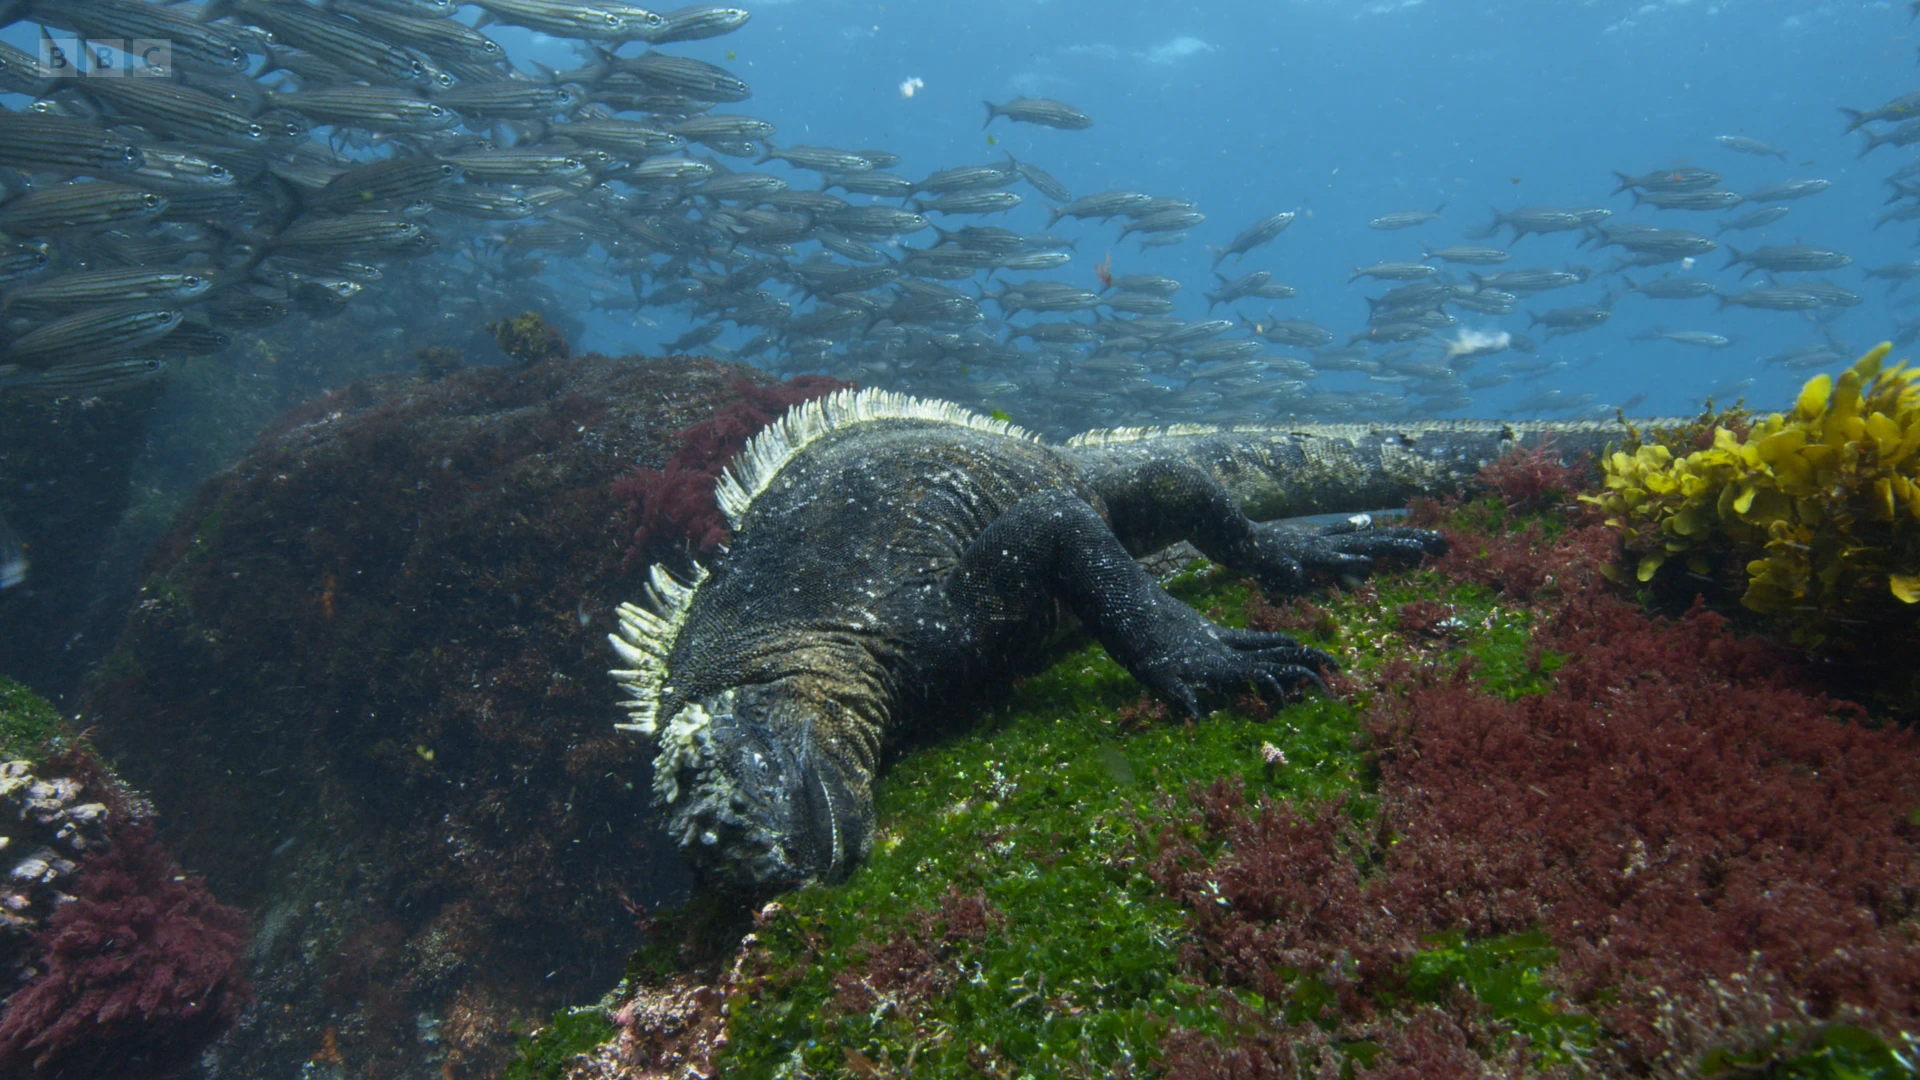 Fernandina marine iguana (Amblyrhynchus cristatus cristatus) as shown in A Perfect Planet - Oceans